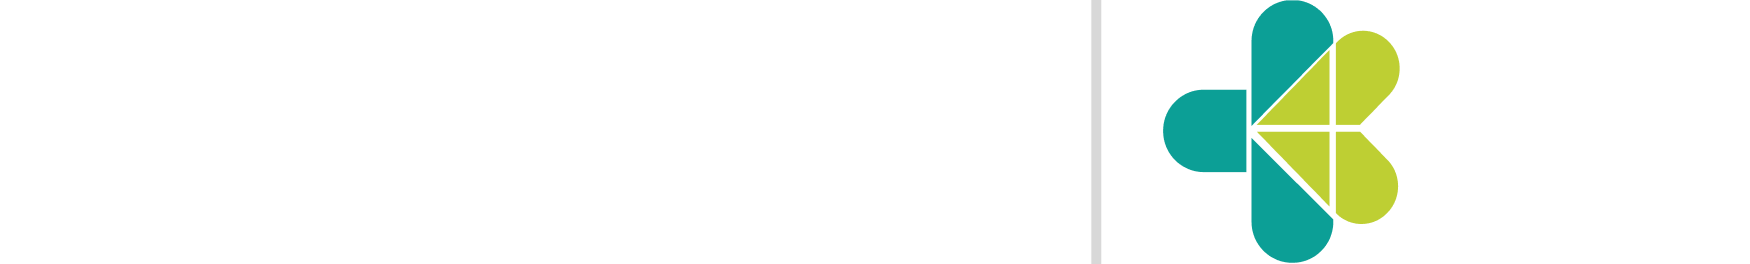 Alodokter Logo Desktop